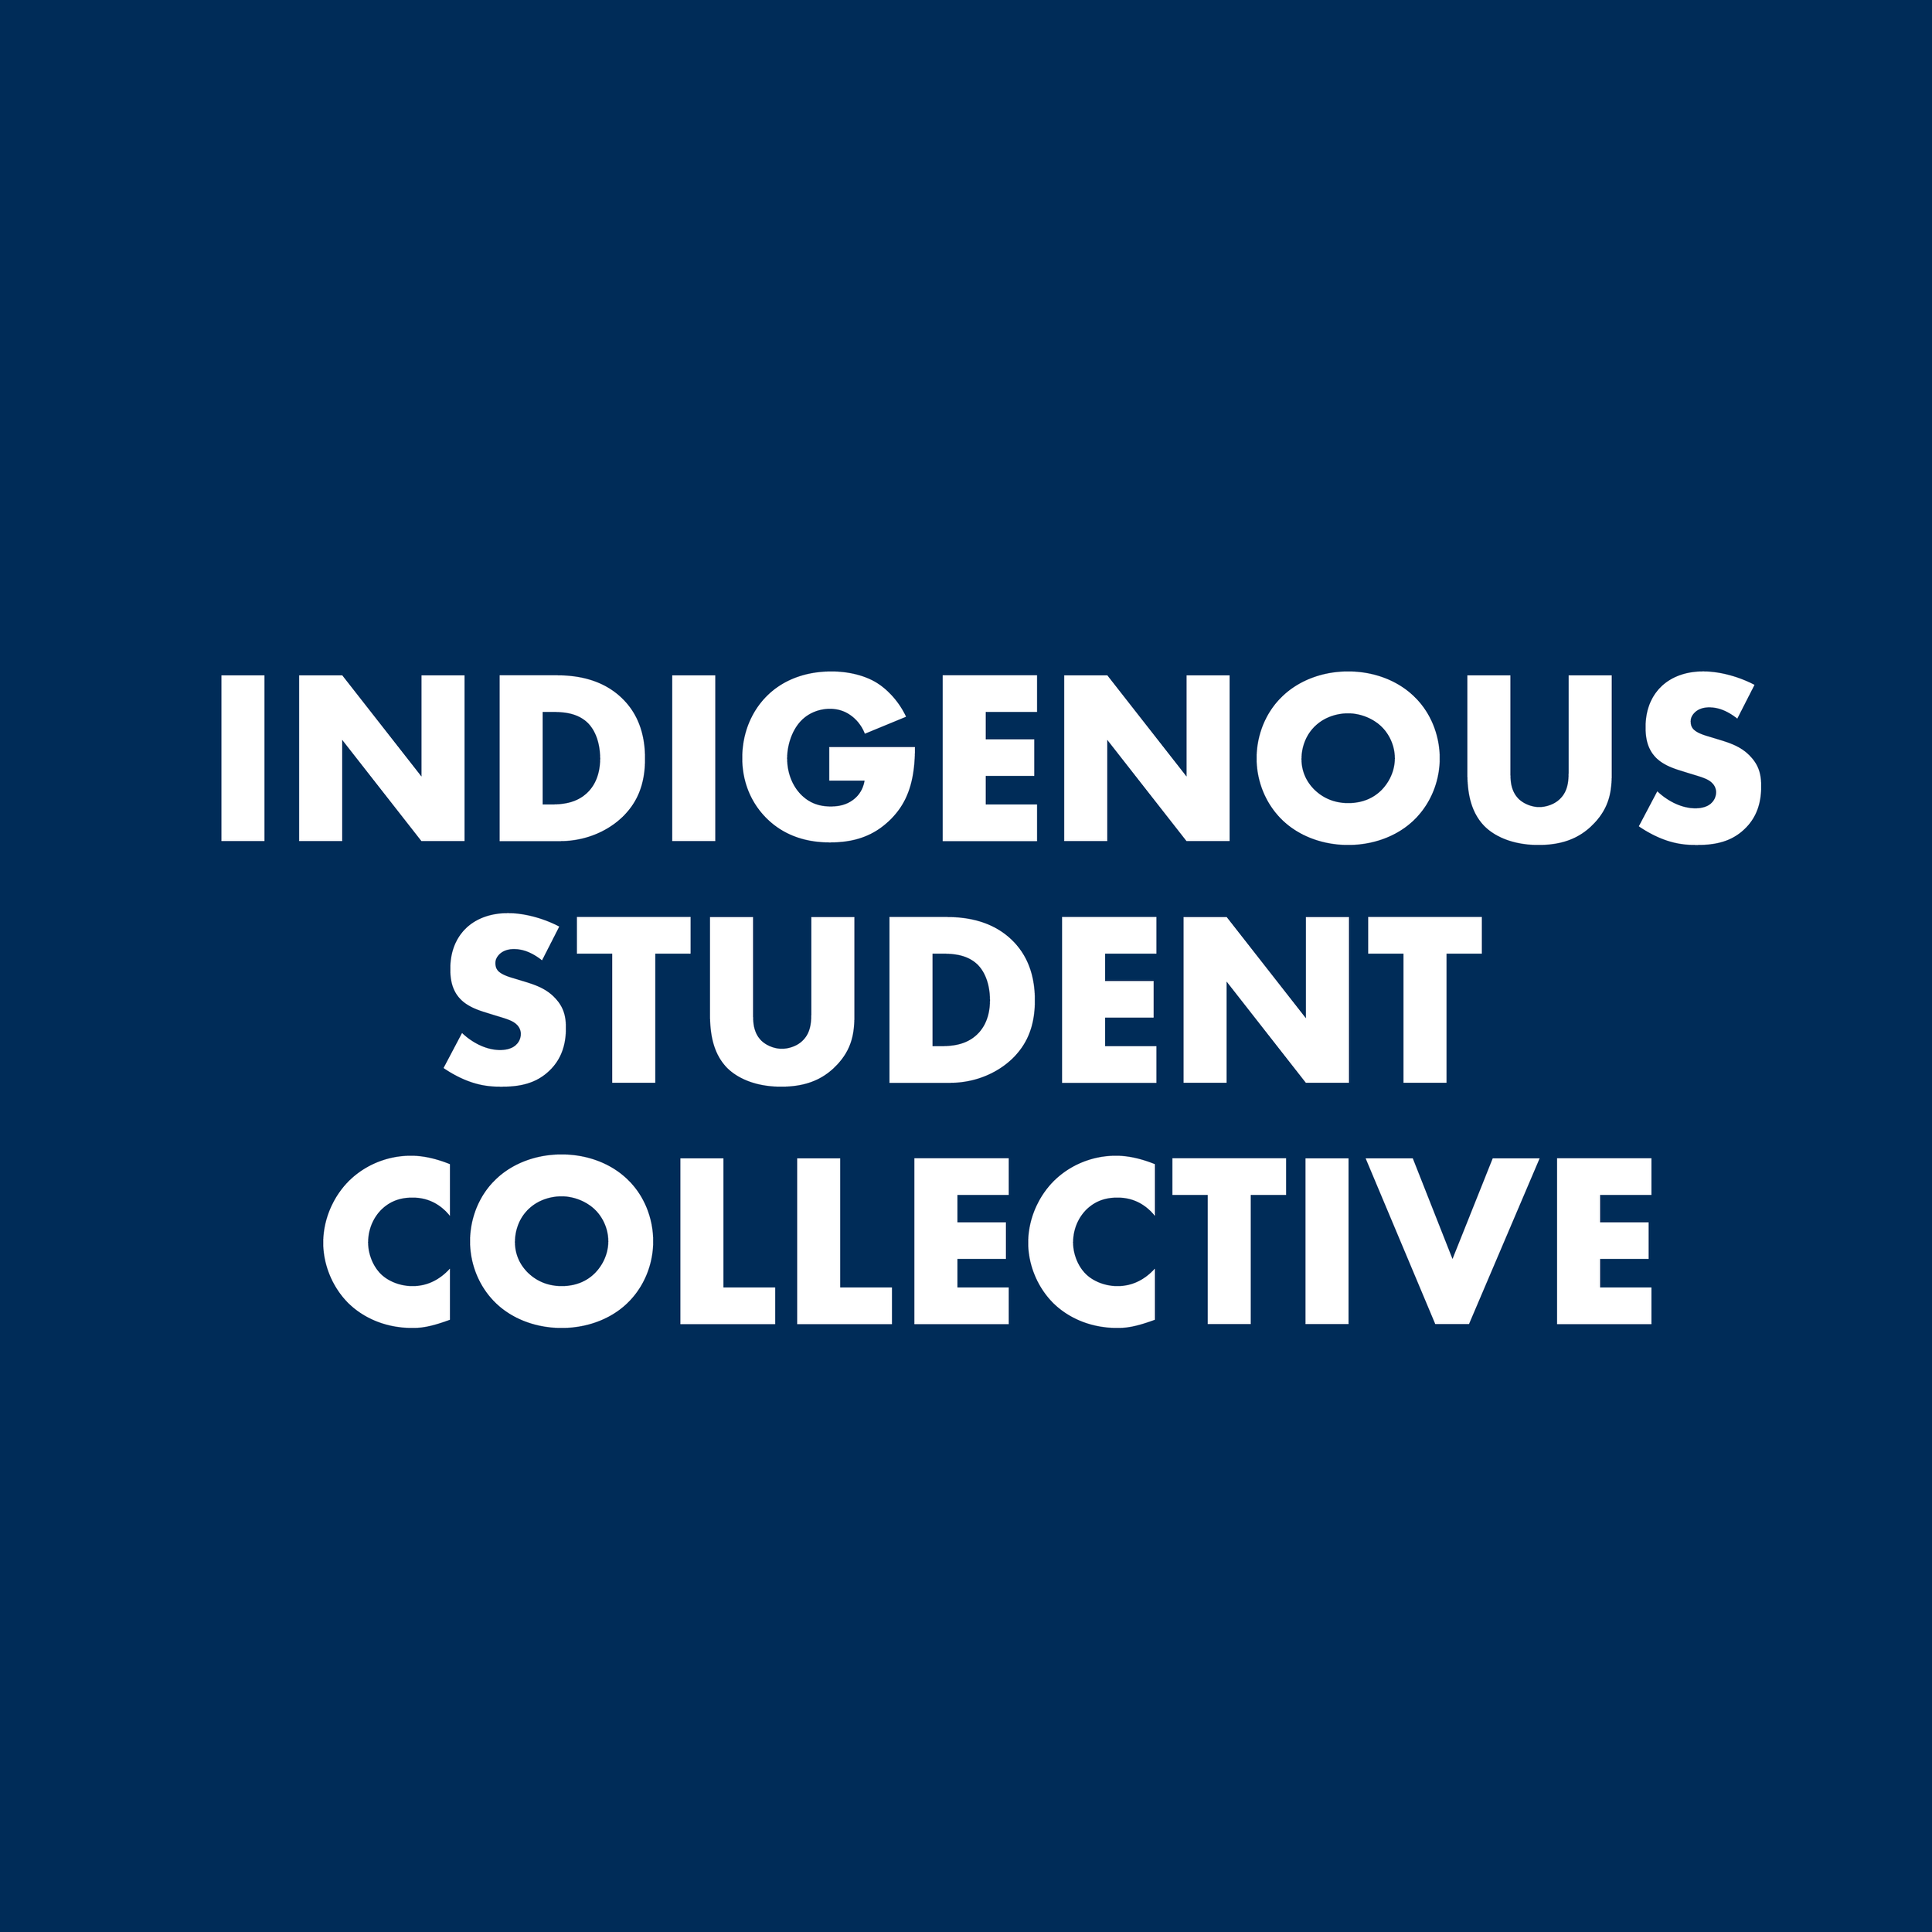 collectives background_indigenous_Mesa de trabajo 1.png